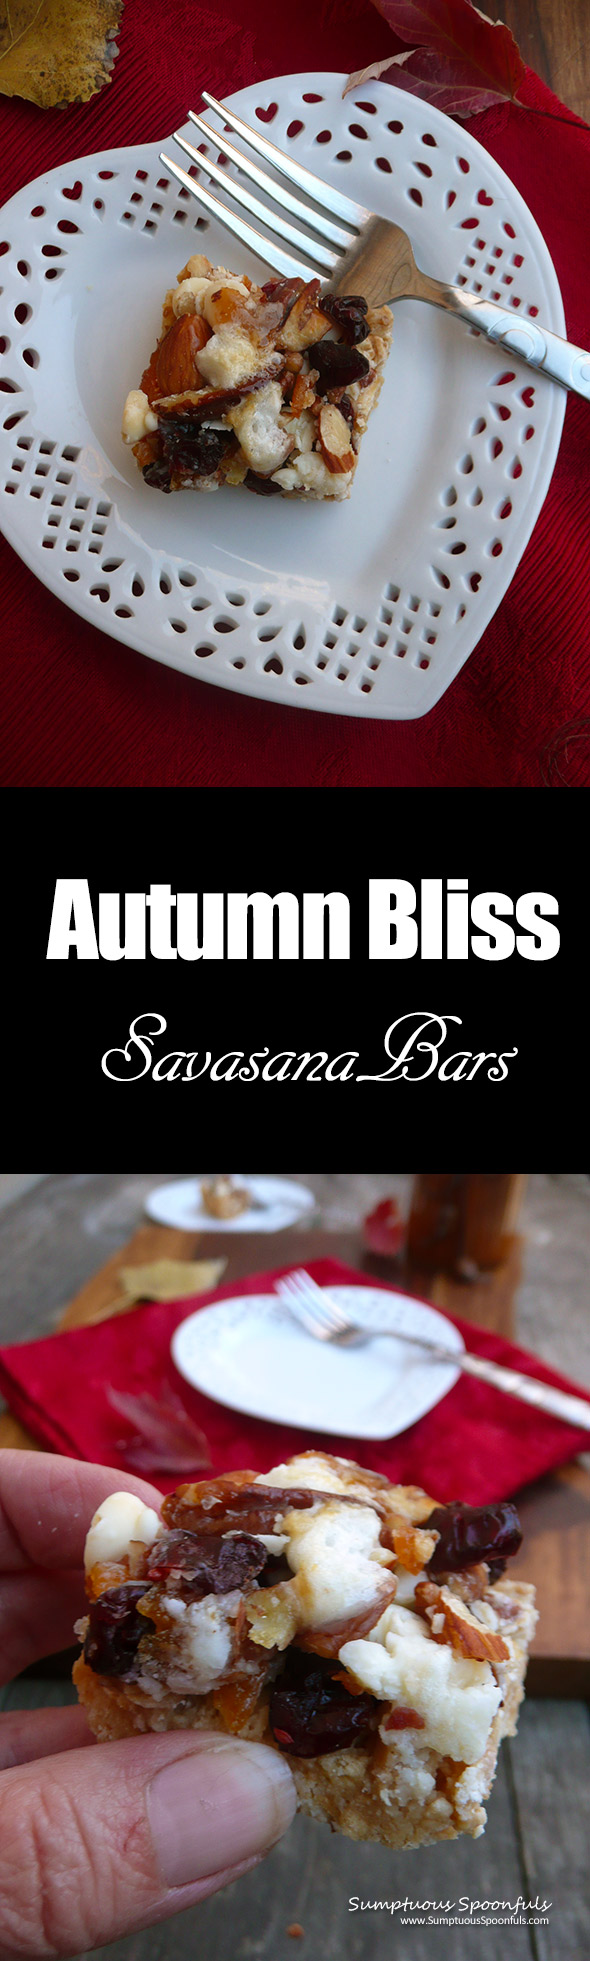 Autumn Bliss Savasana Bars ~ Sumptuous Spoonfuls #magic #cookie #bars